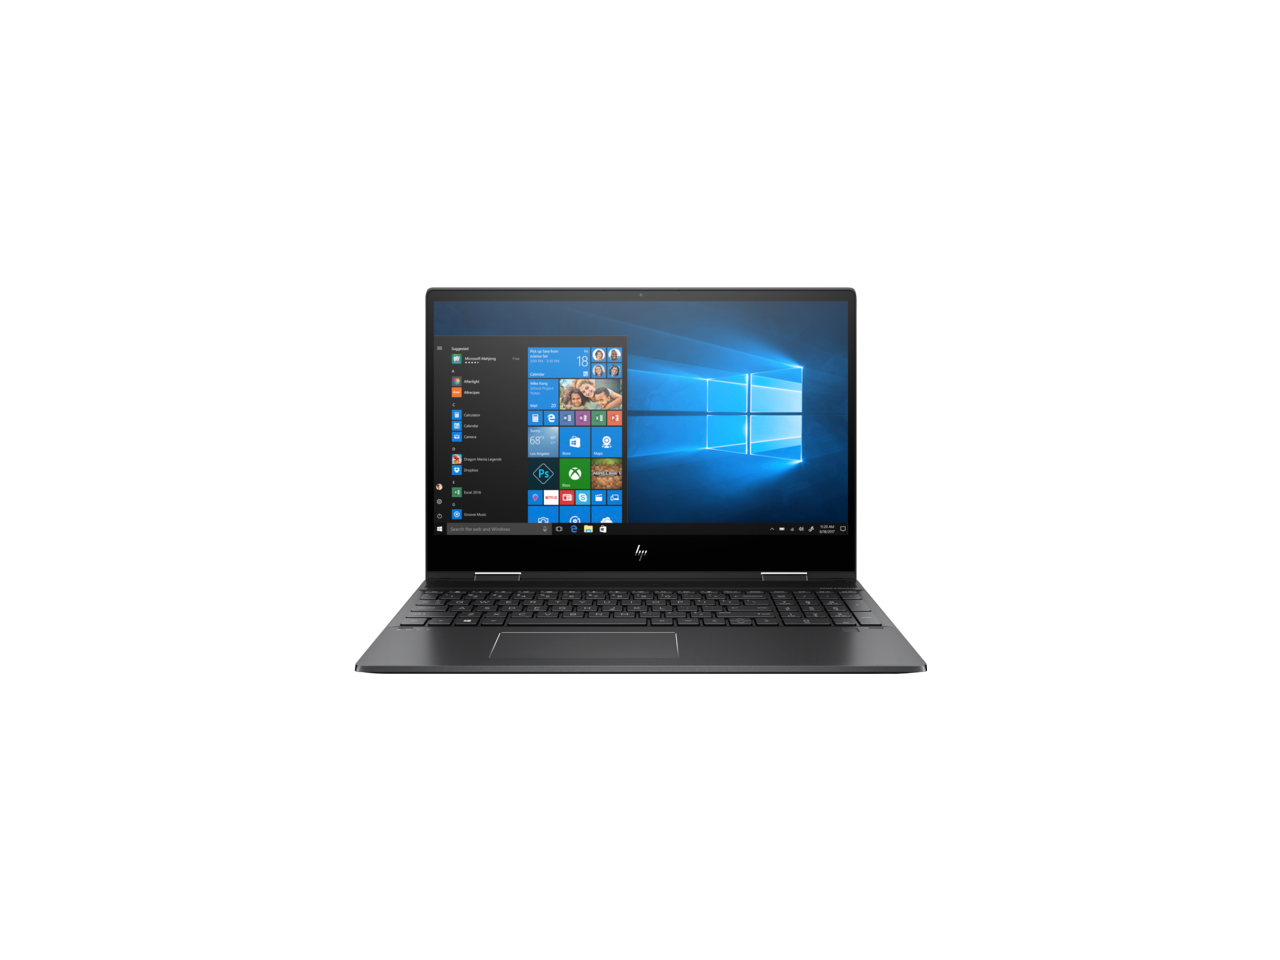 HP ENVY x360 - 15z Home and Business Laptop (AMD Ryzen 7 3700U 4-Core, 16GB RAM, 1TB PCIe SSD, 15.6